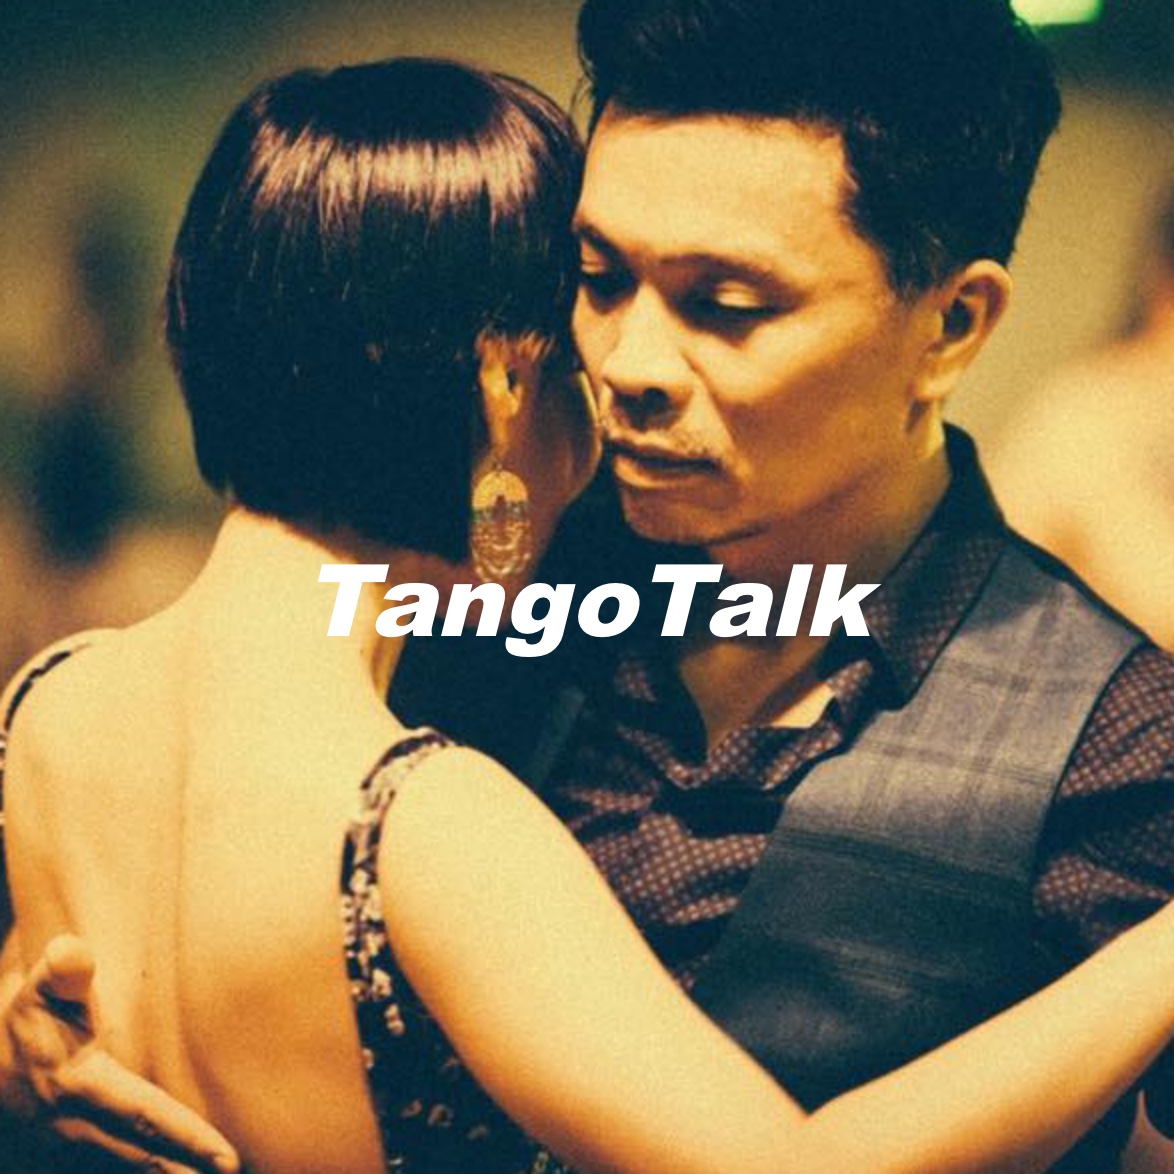 TangoTalk